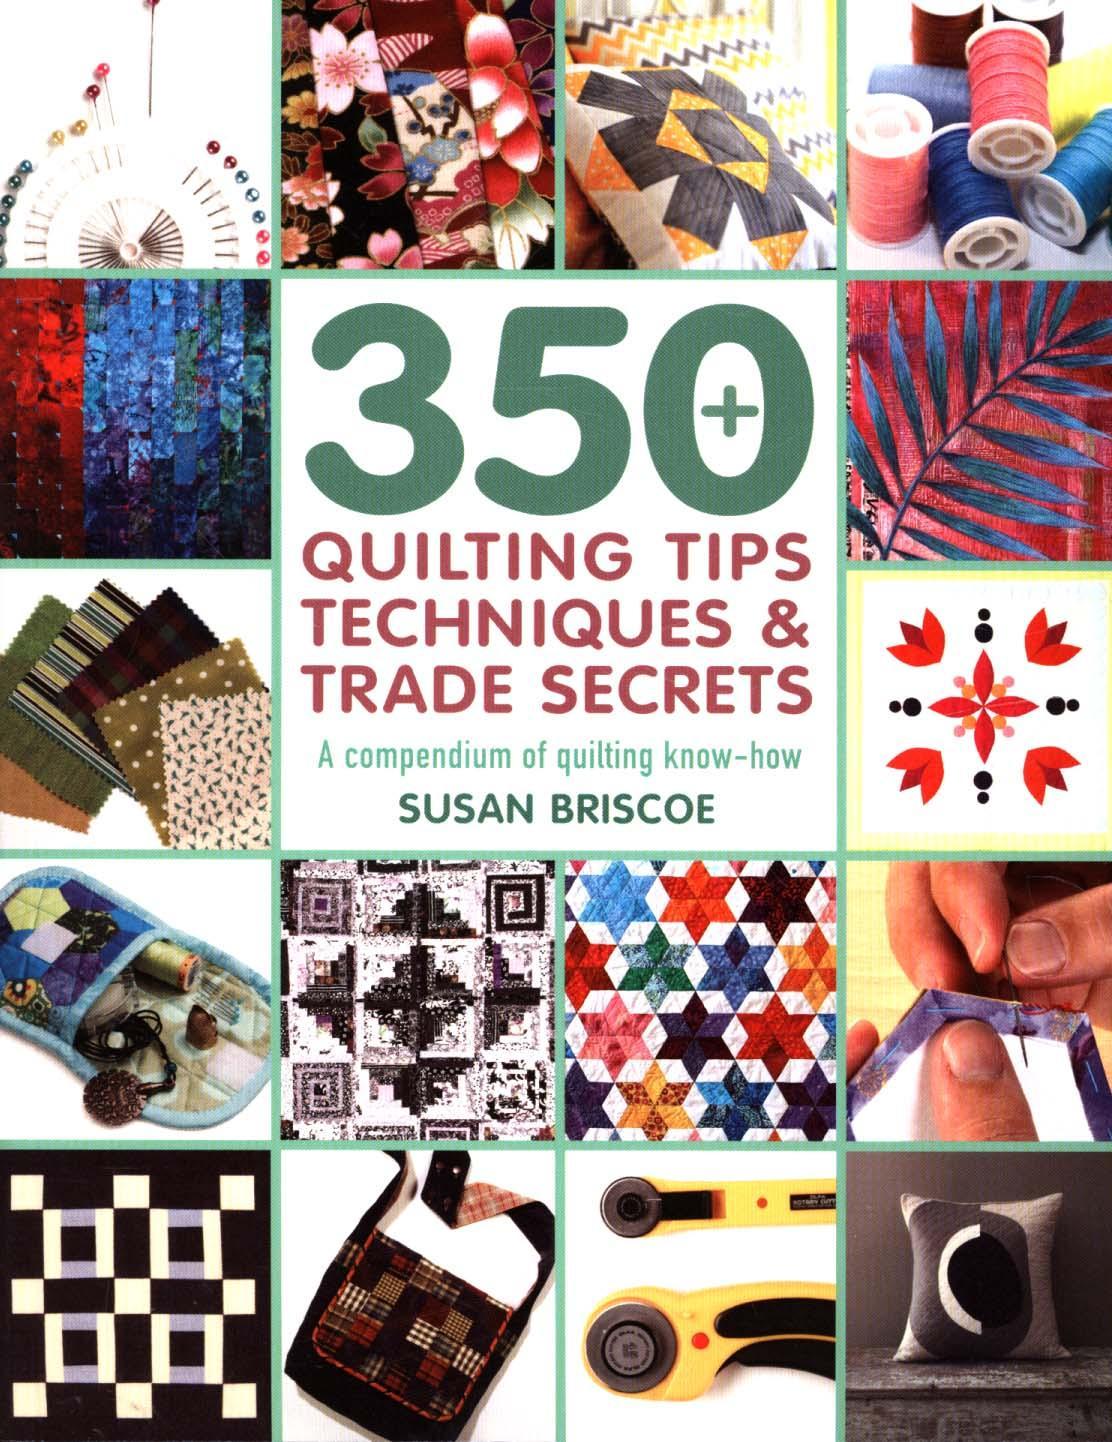 350+ Quilting Tips, Techniques & Trade Secrets